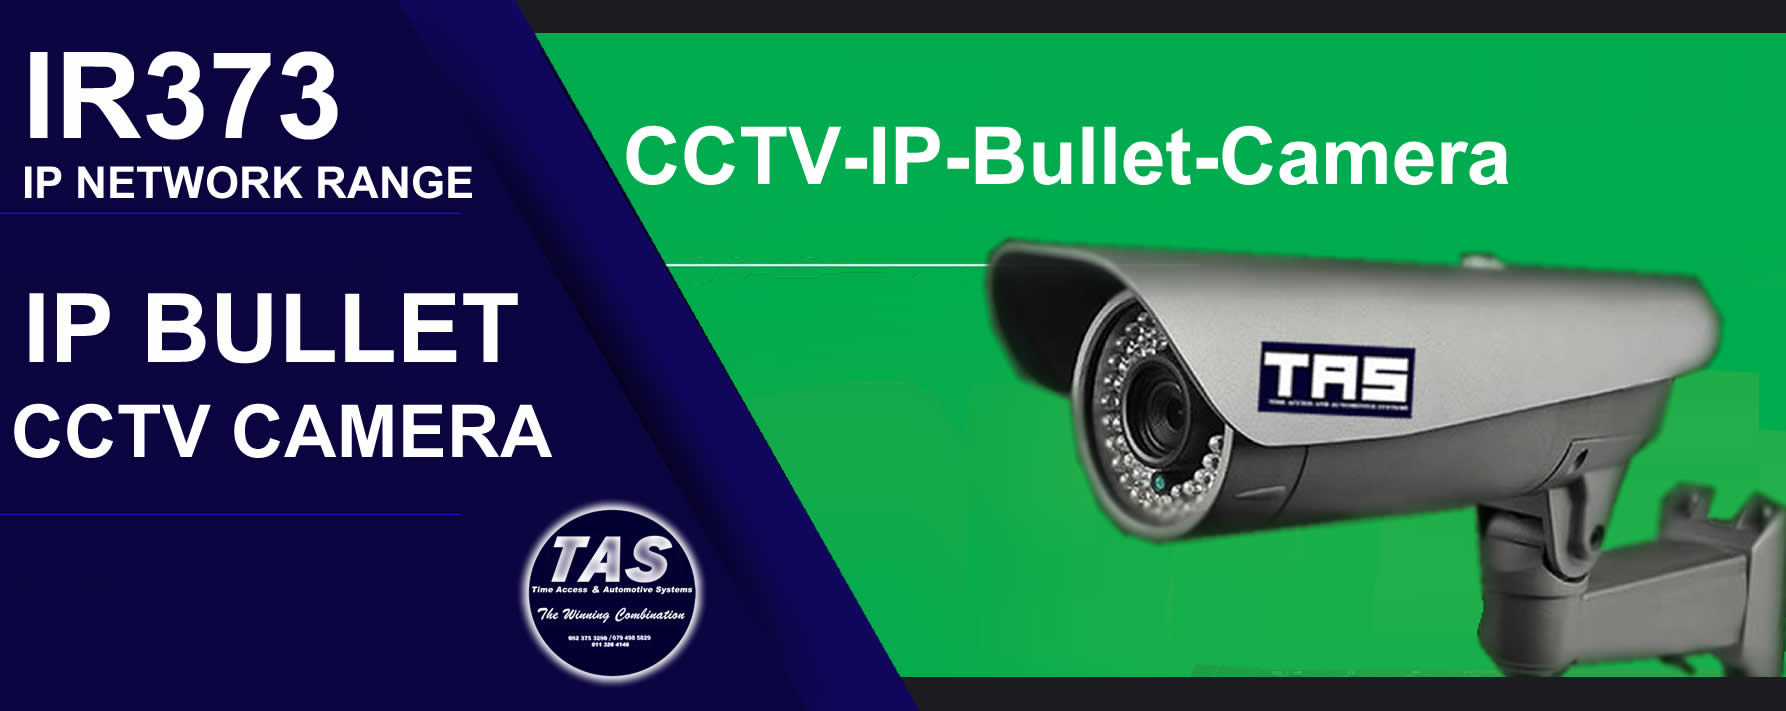 ir373 CCTV bullet Cameras security control banner